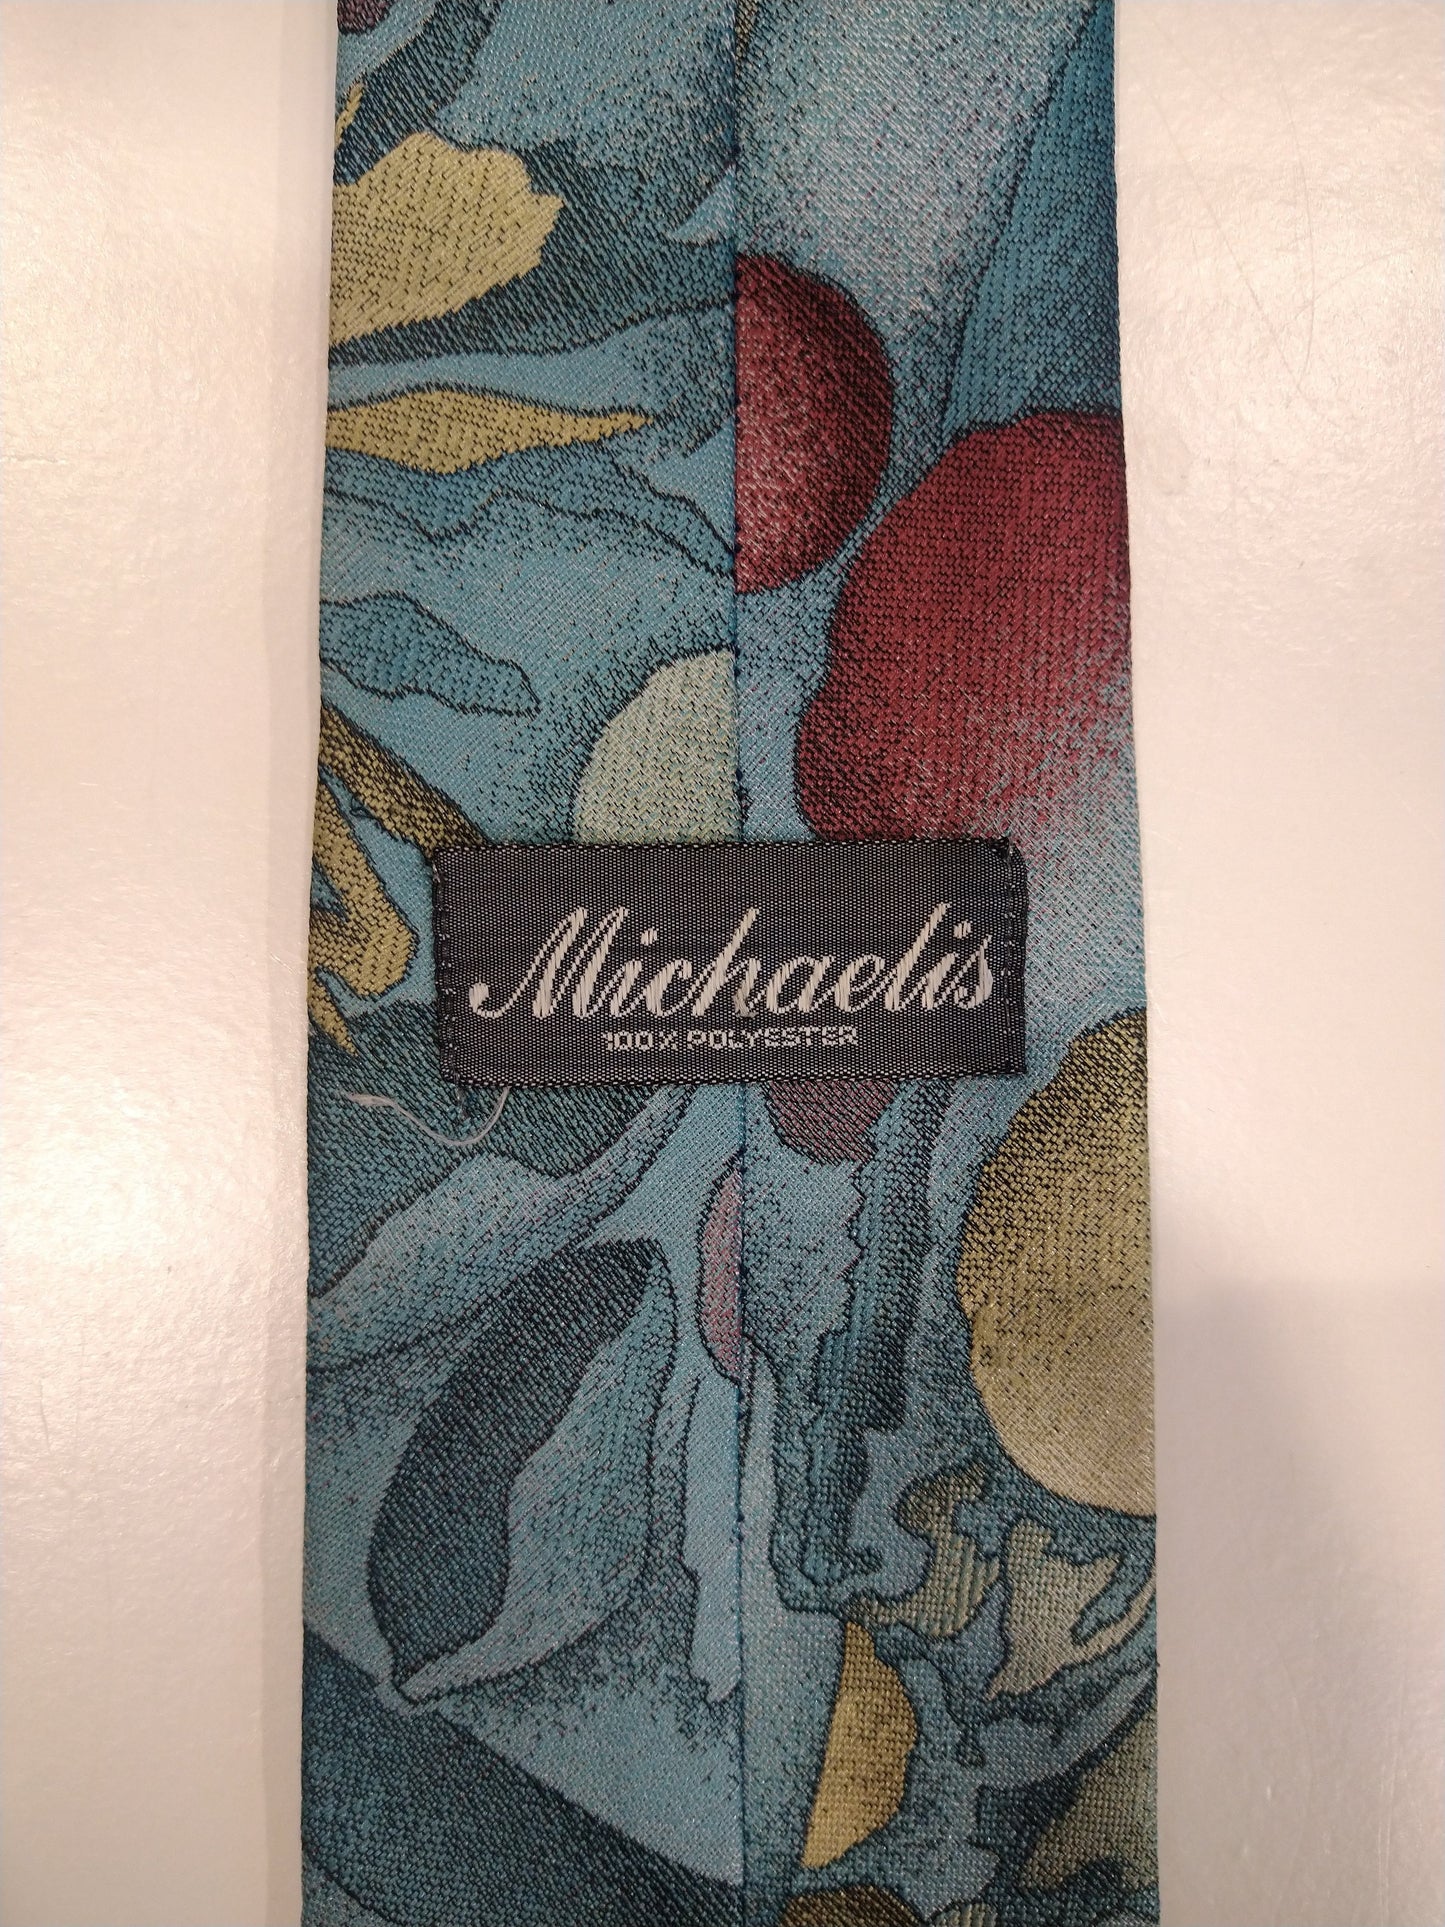 Vintage Michaelis Polyester Tie. Beau motif vintage.